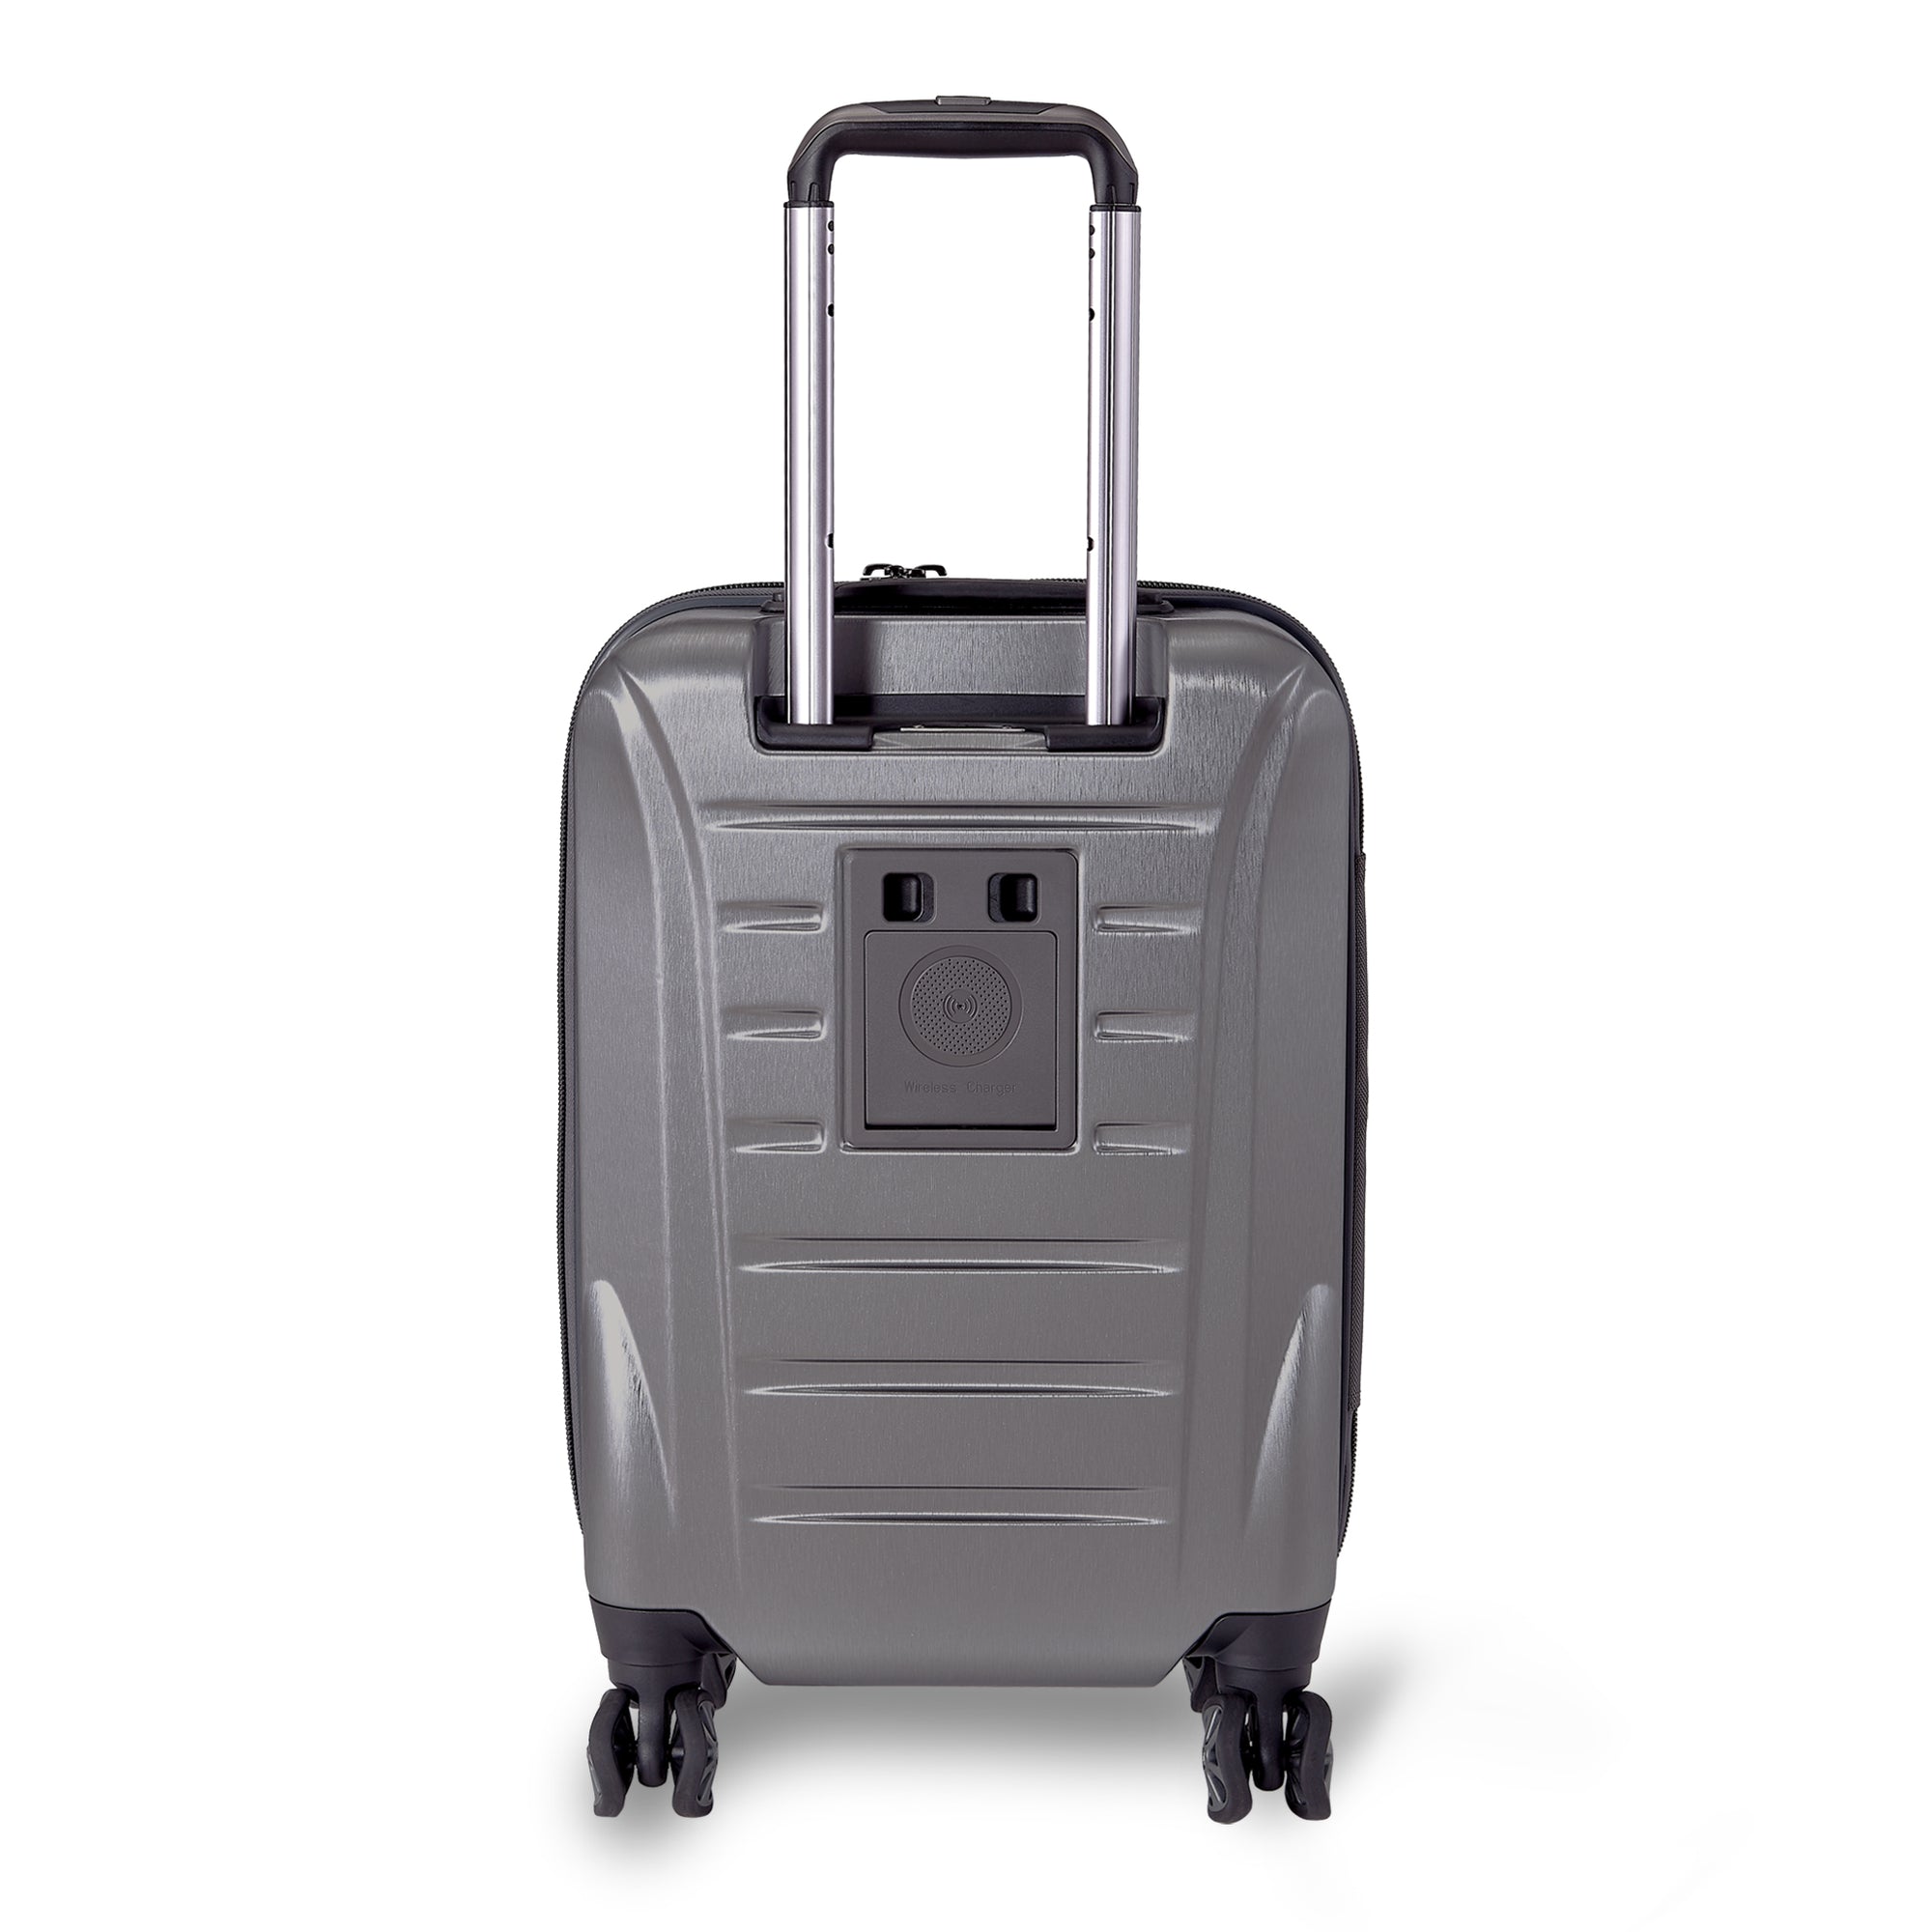 USB Luggage Trolley Backpack